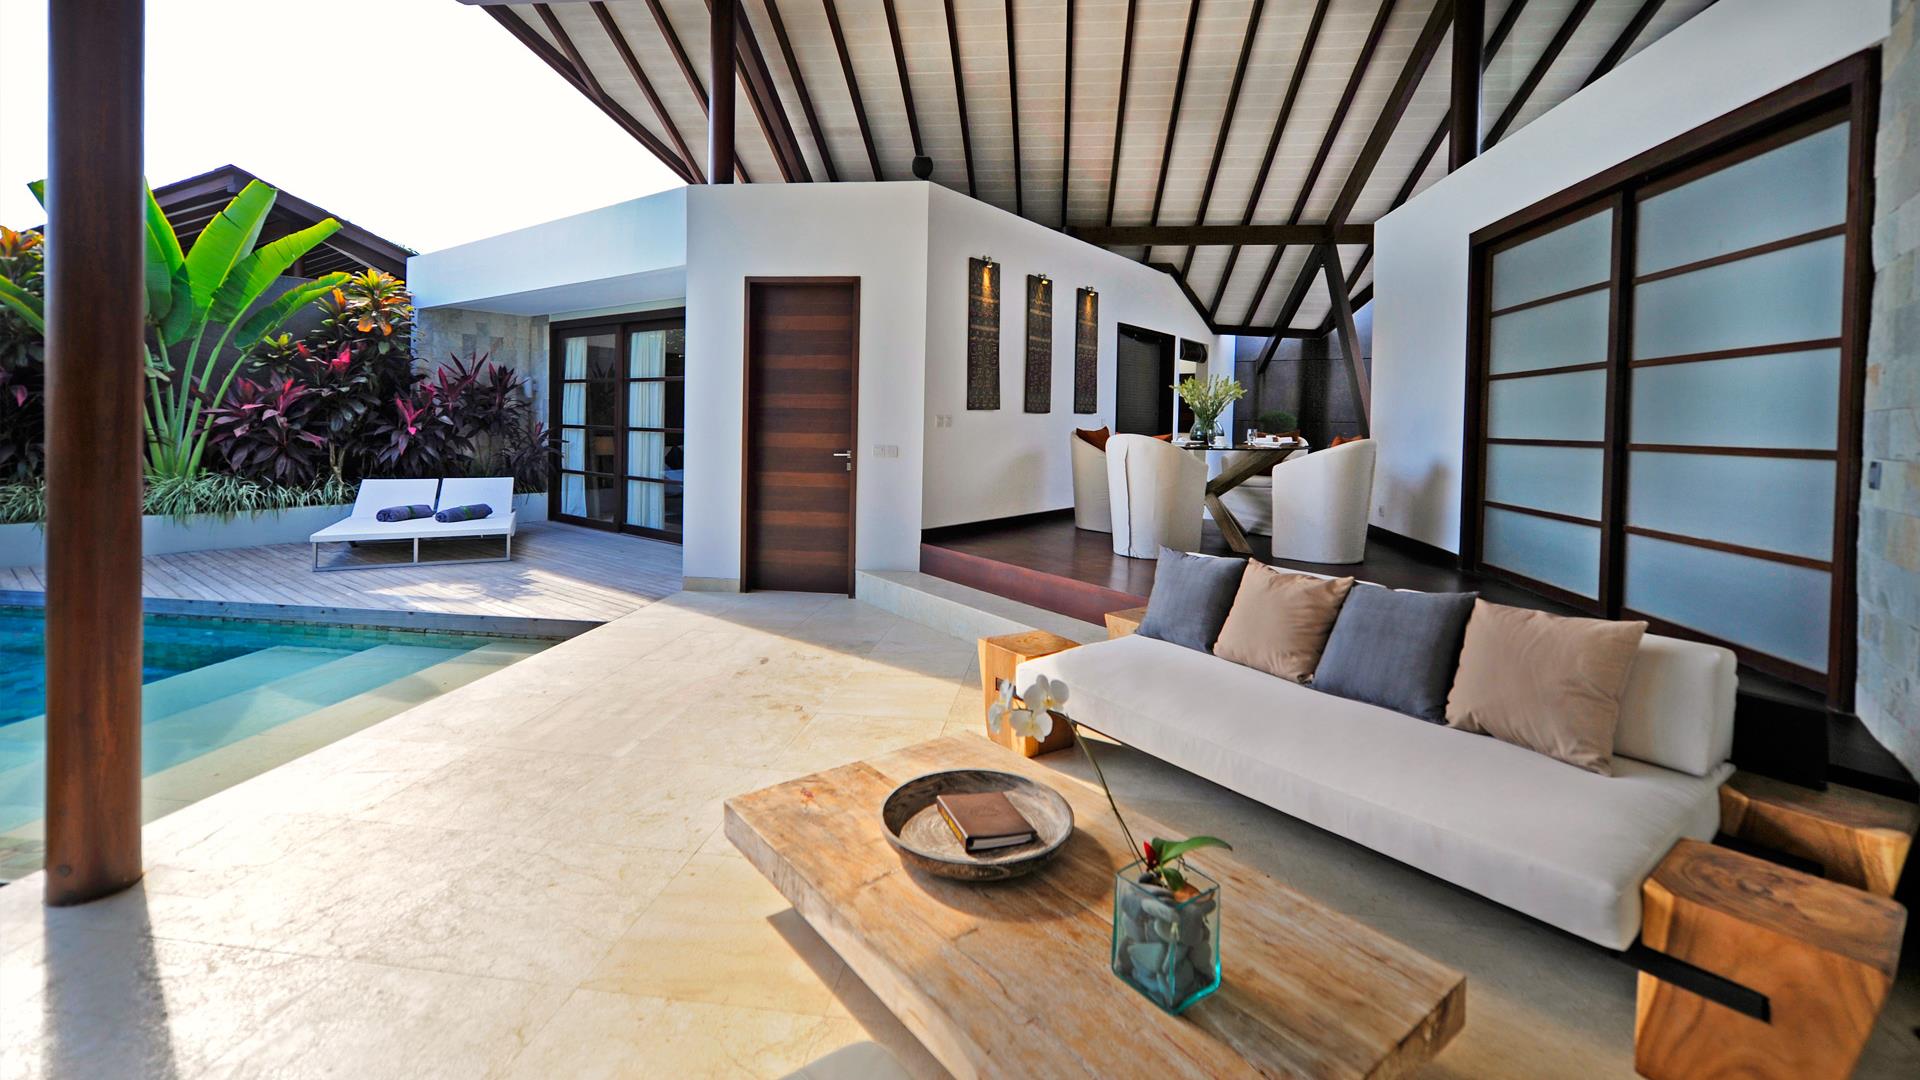 Lounge Area with Pool View - The Layar - Seminyak, Bali